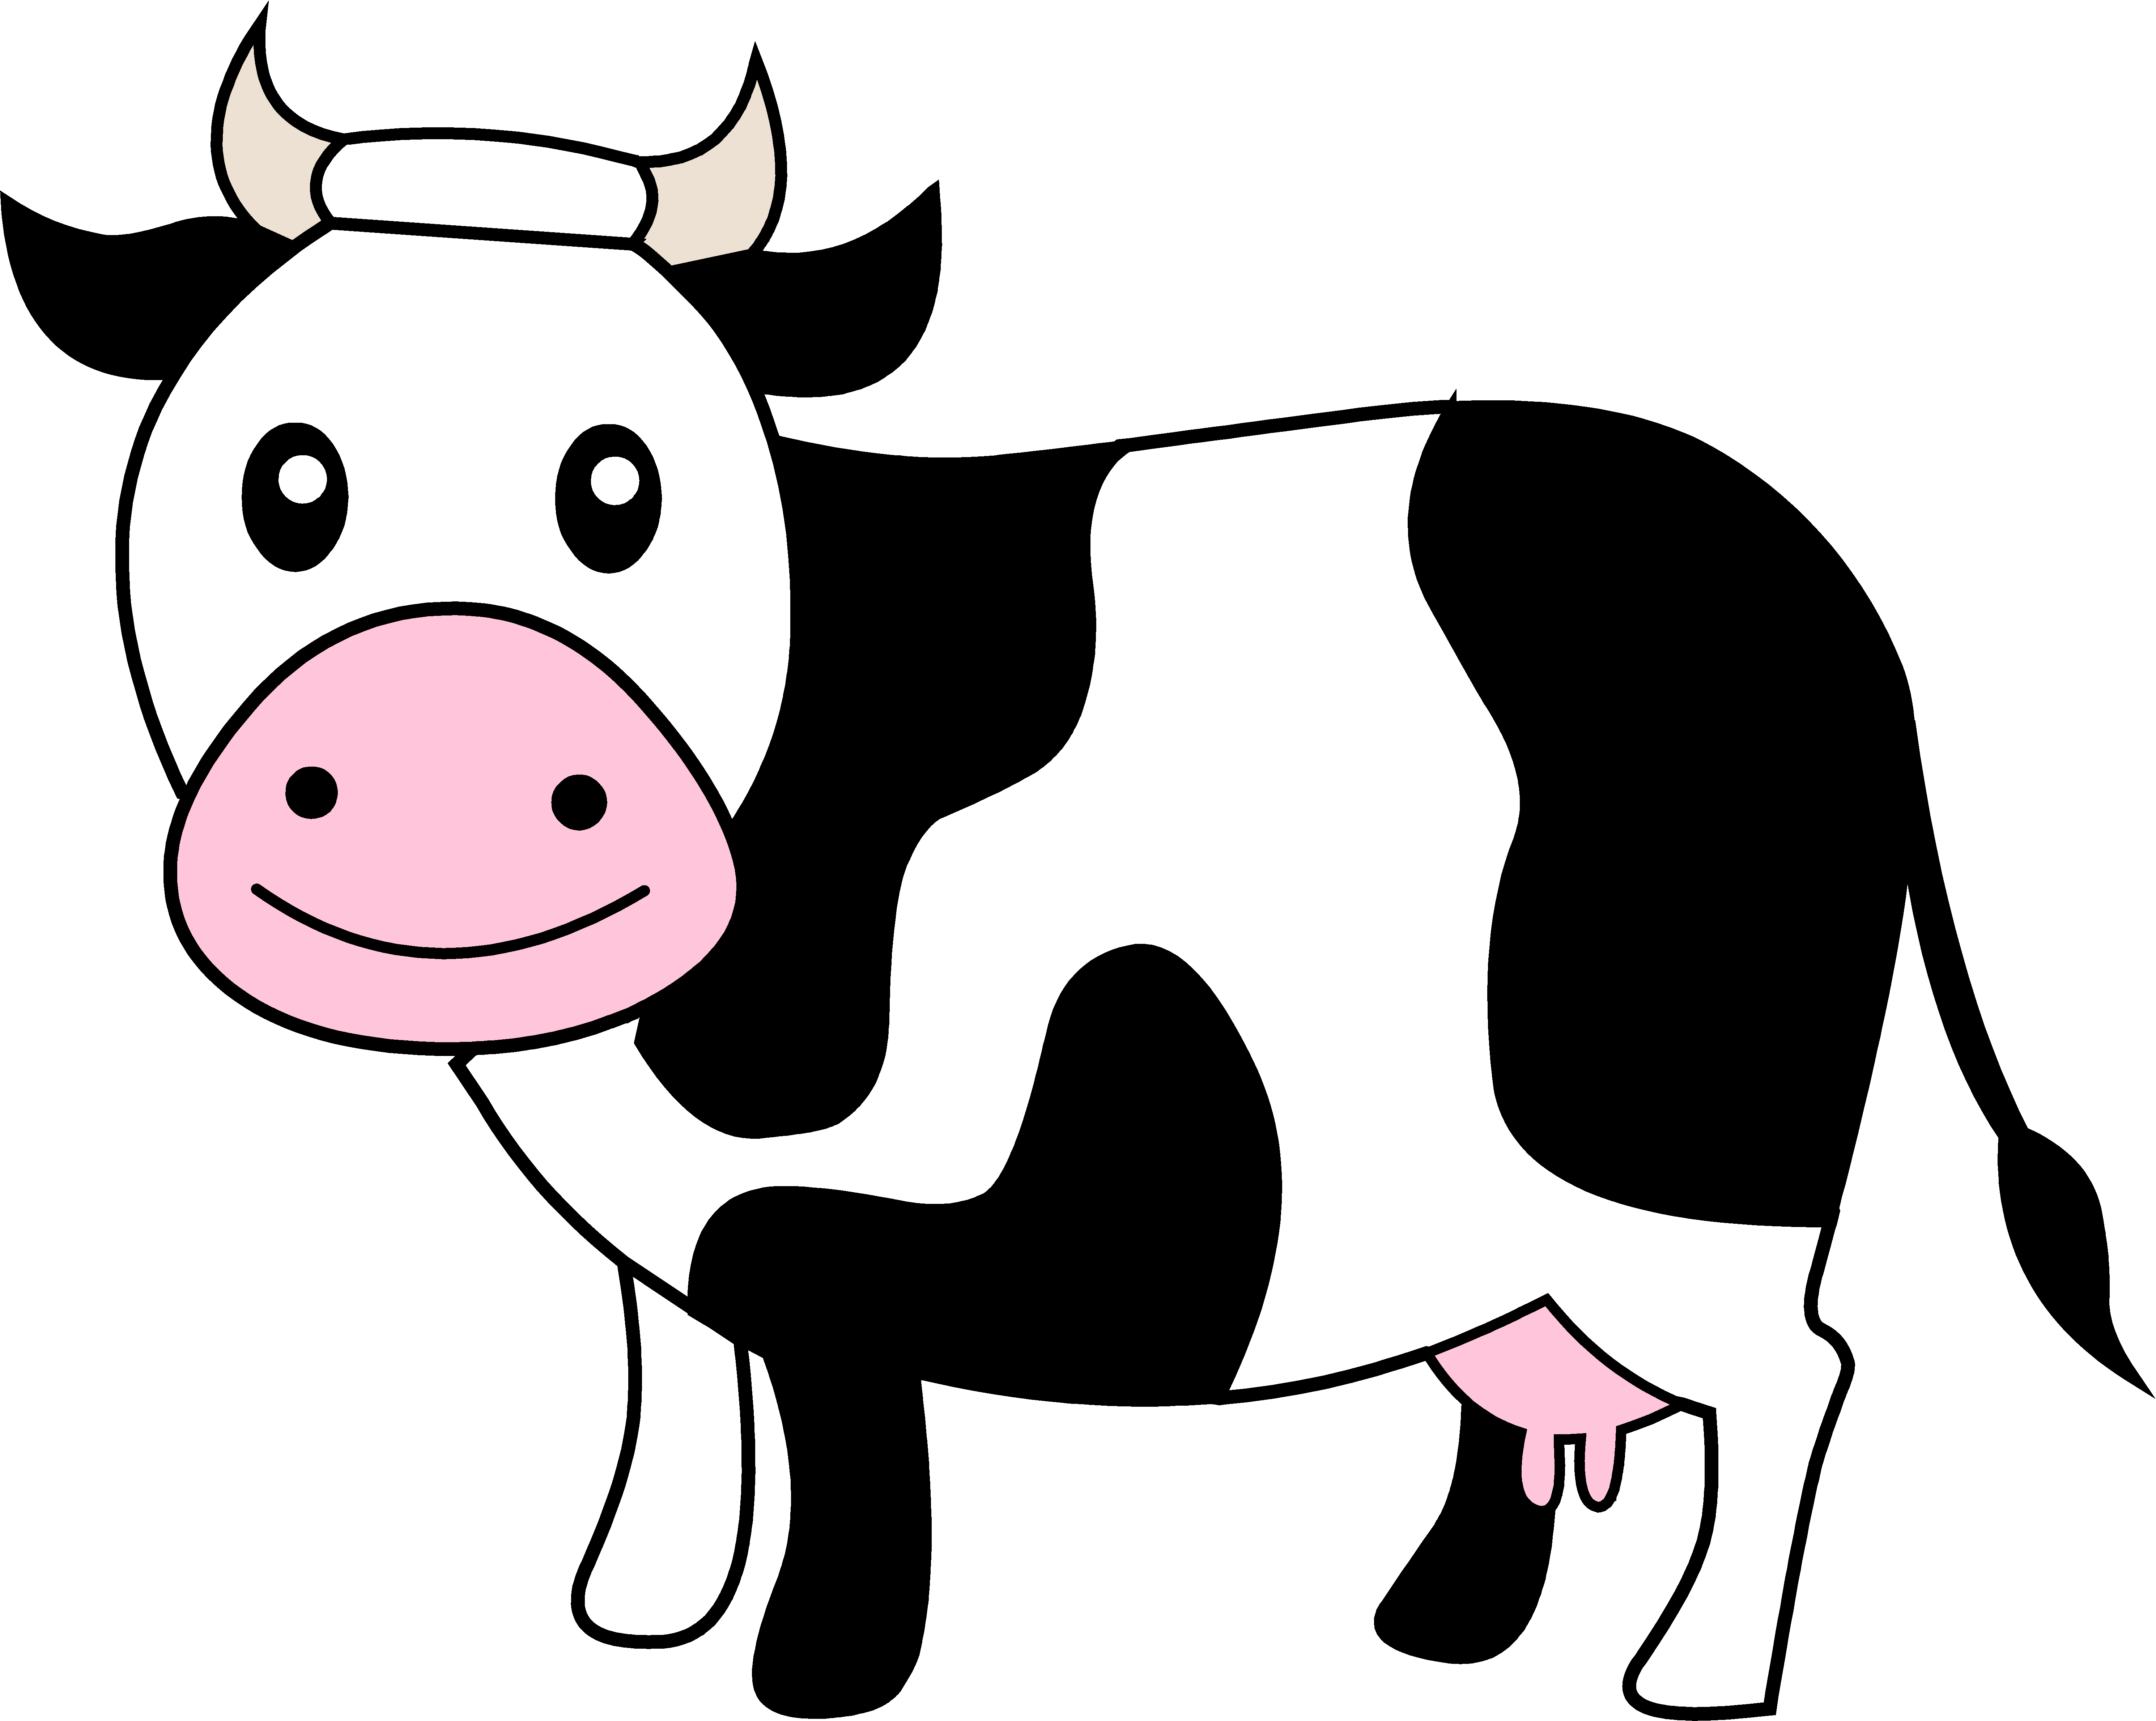 Cow clipart vector cute simple outline